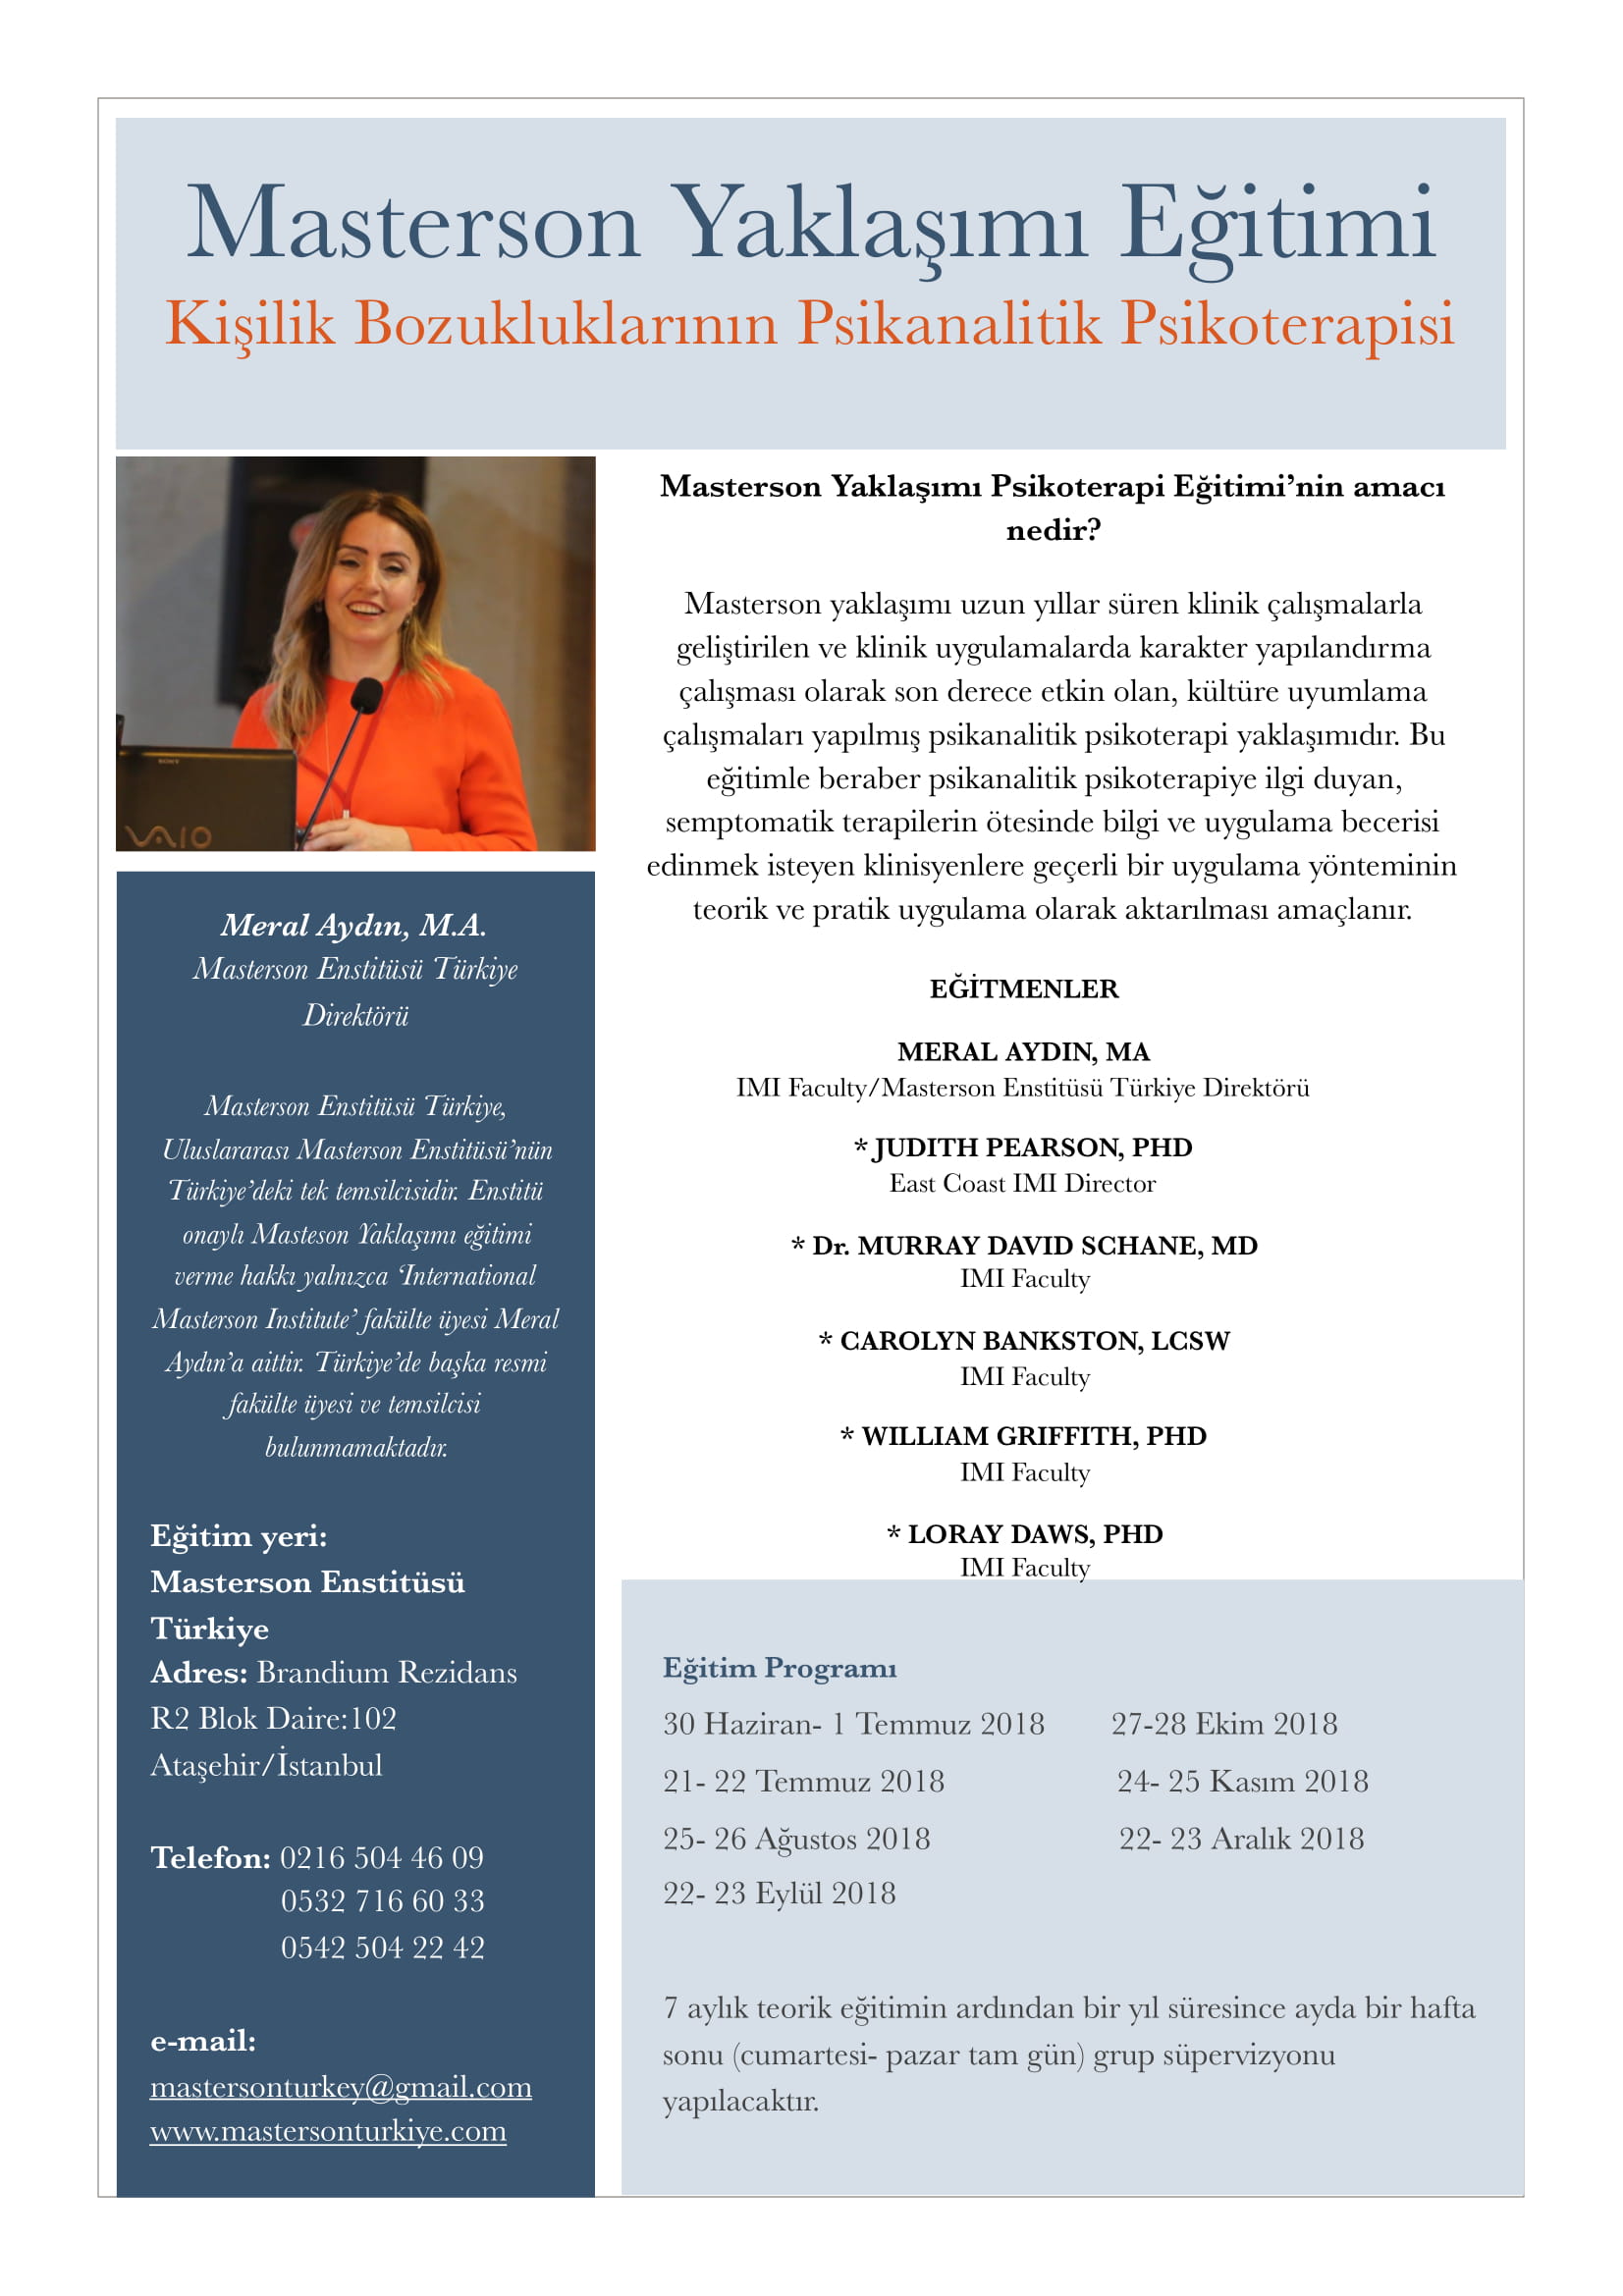 Masterson 2018 Eğitim Programı PDF-1